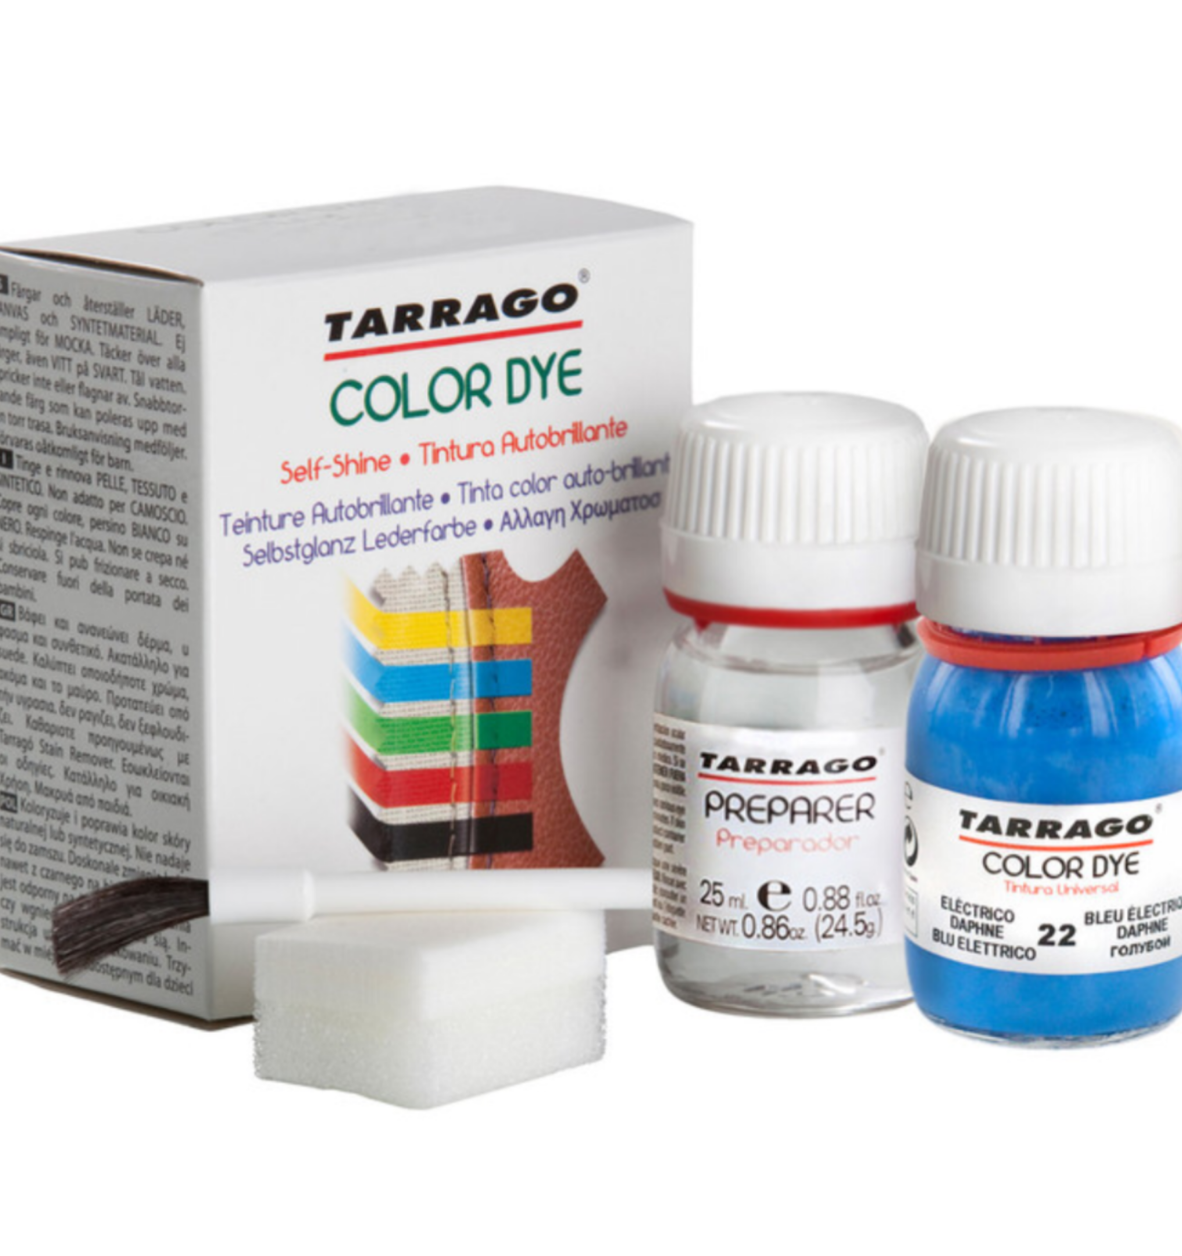 Tarrago Self Shine Color Dye Kit - ShoeMedic